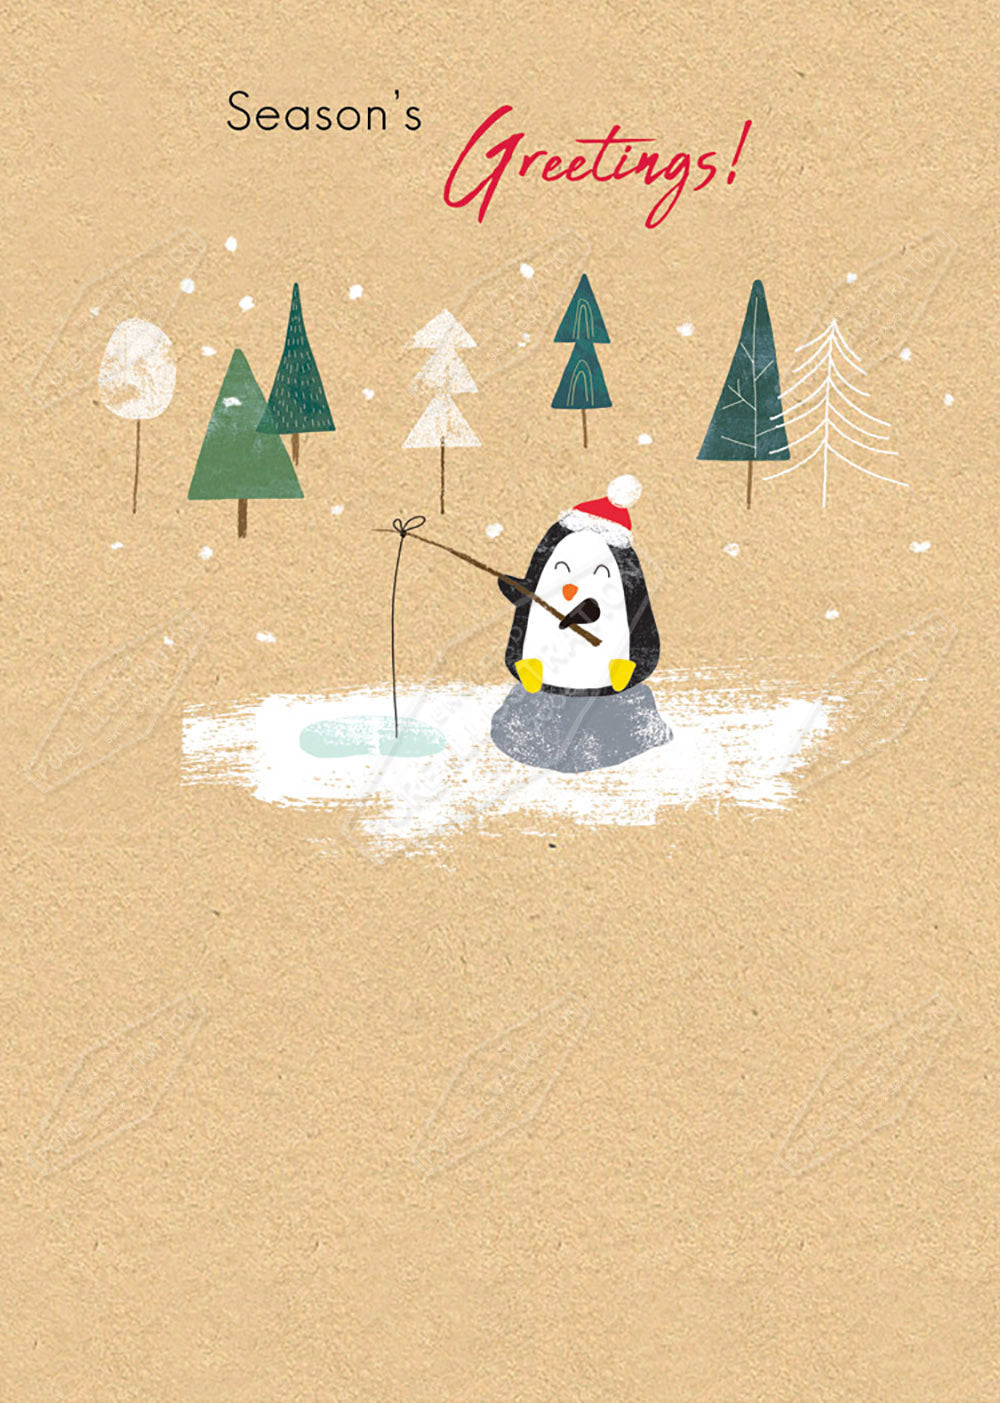 Seasons Greetings Penguin Greeting Card Design by Cory Reid for Pure Art Licensing Agency & Surface Design Studio